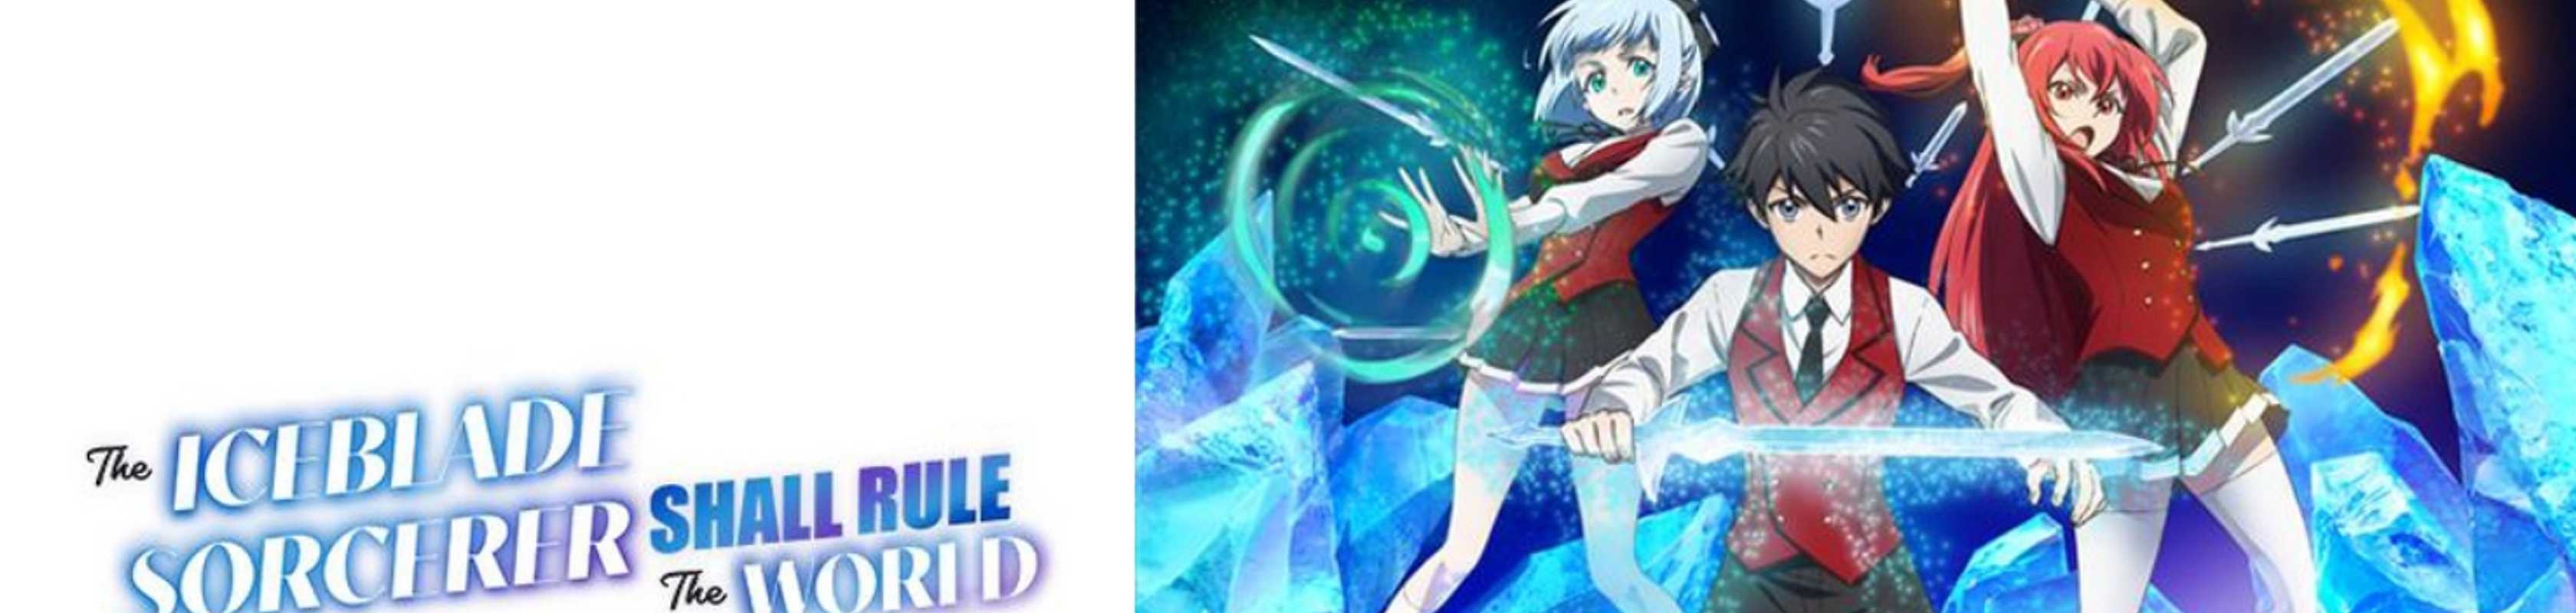 Anime Like The Iceblade Sorcerer Shall Rule the World